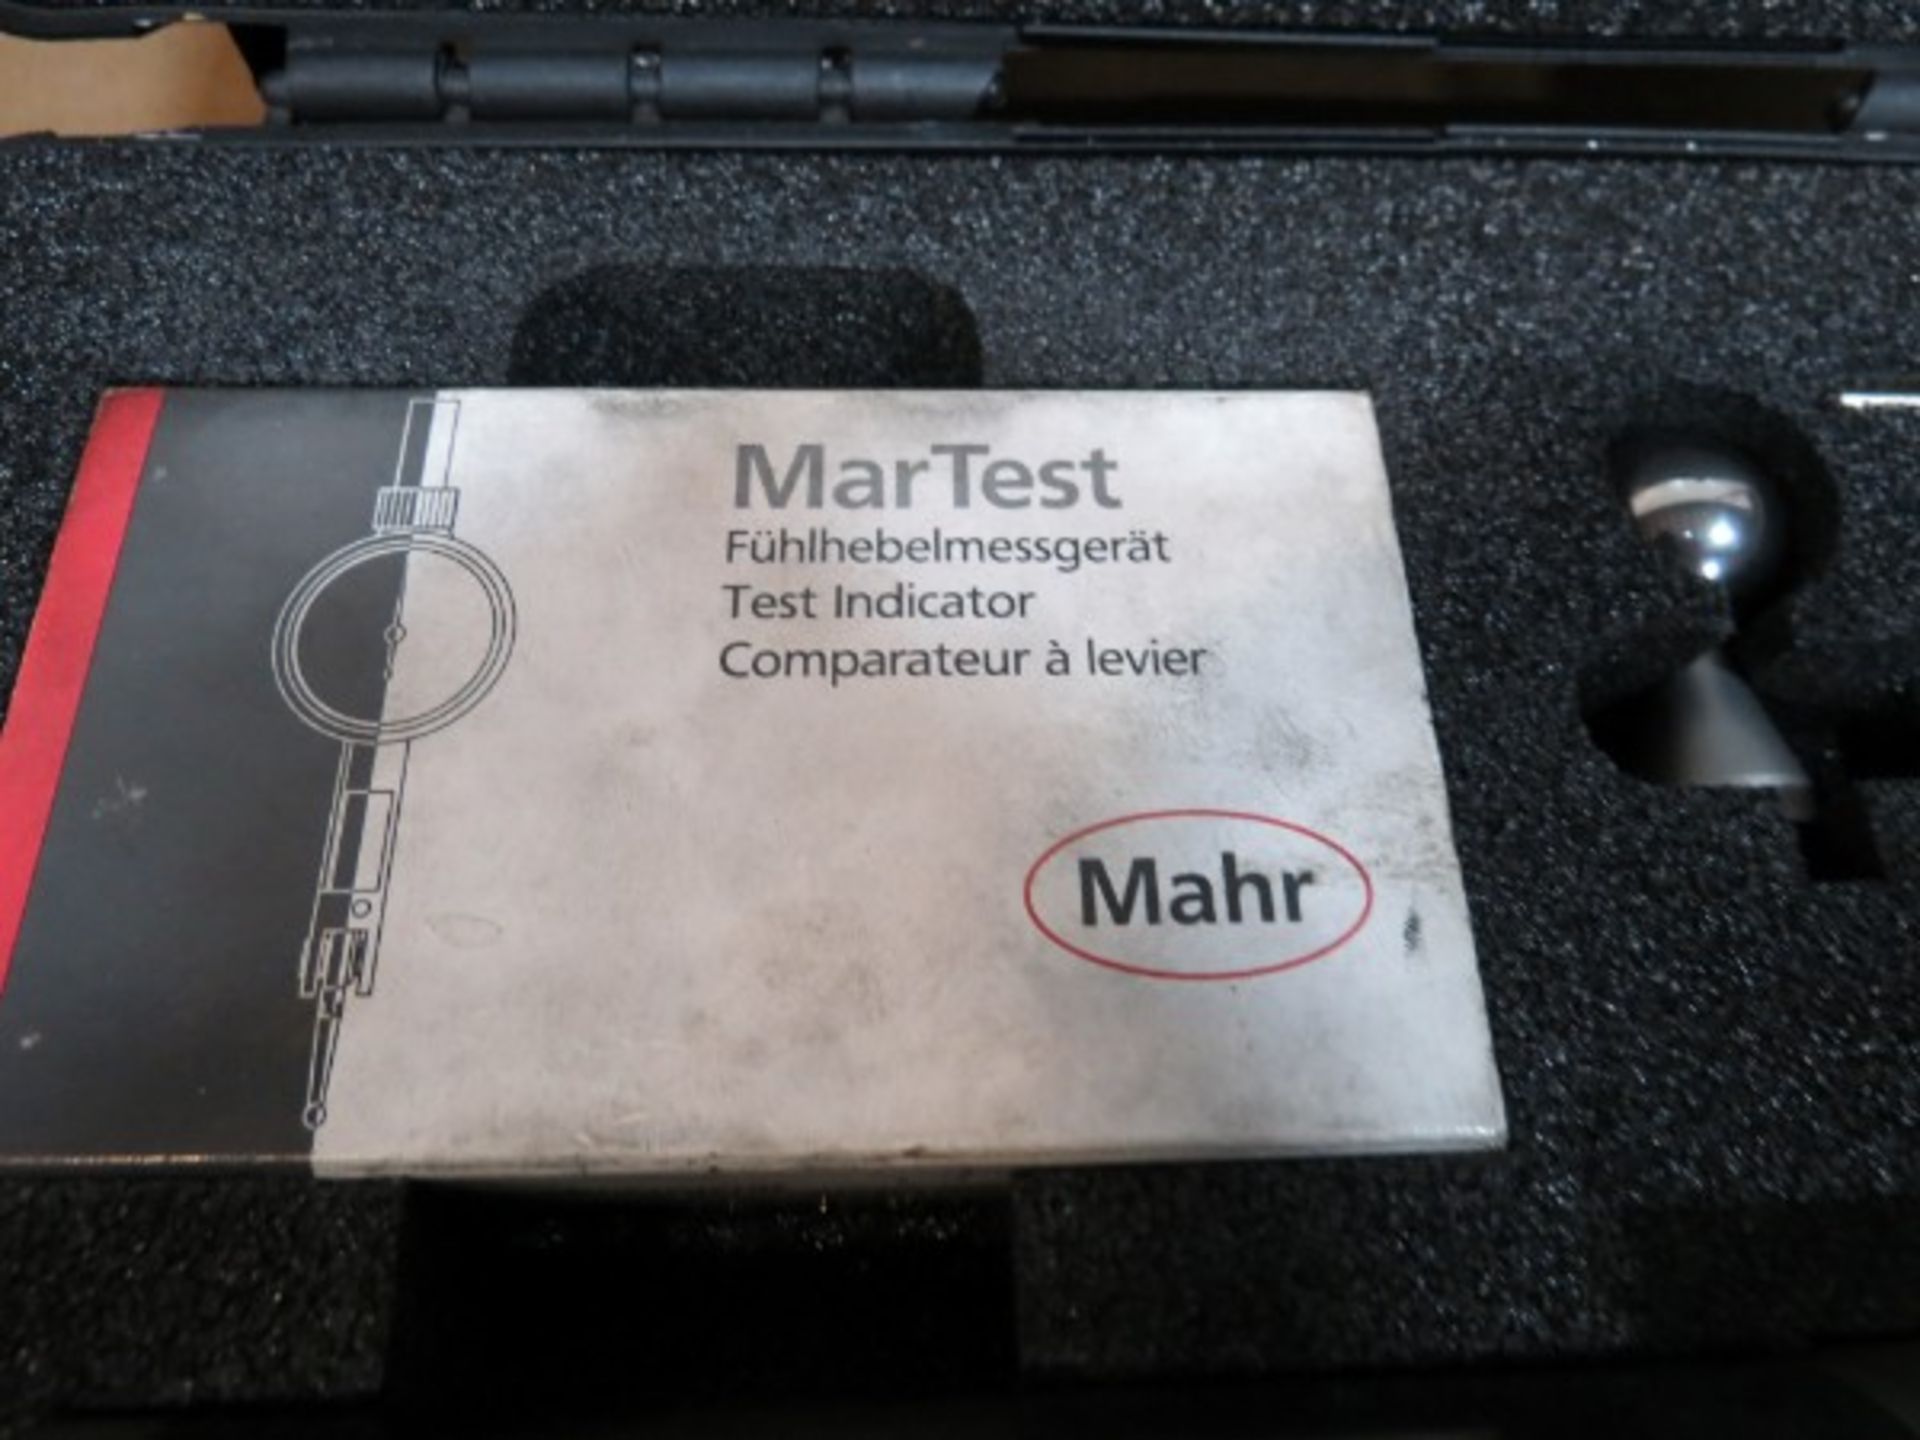 Deckel Maho Quickset Tool Setter with Mahr MarTest indicator - Image 2 of 3